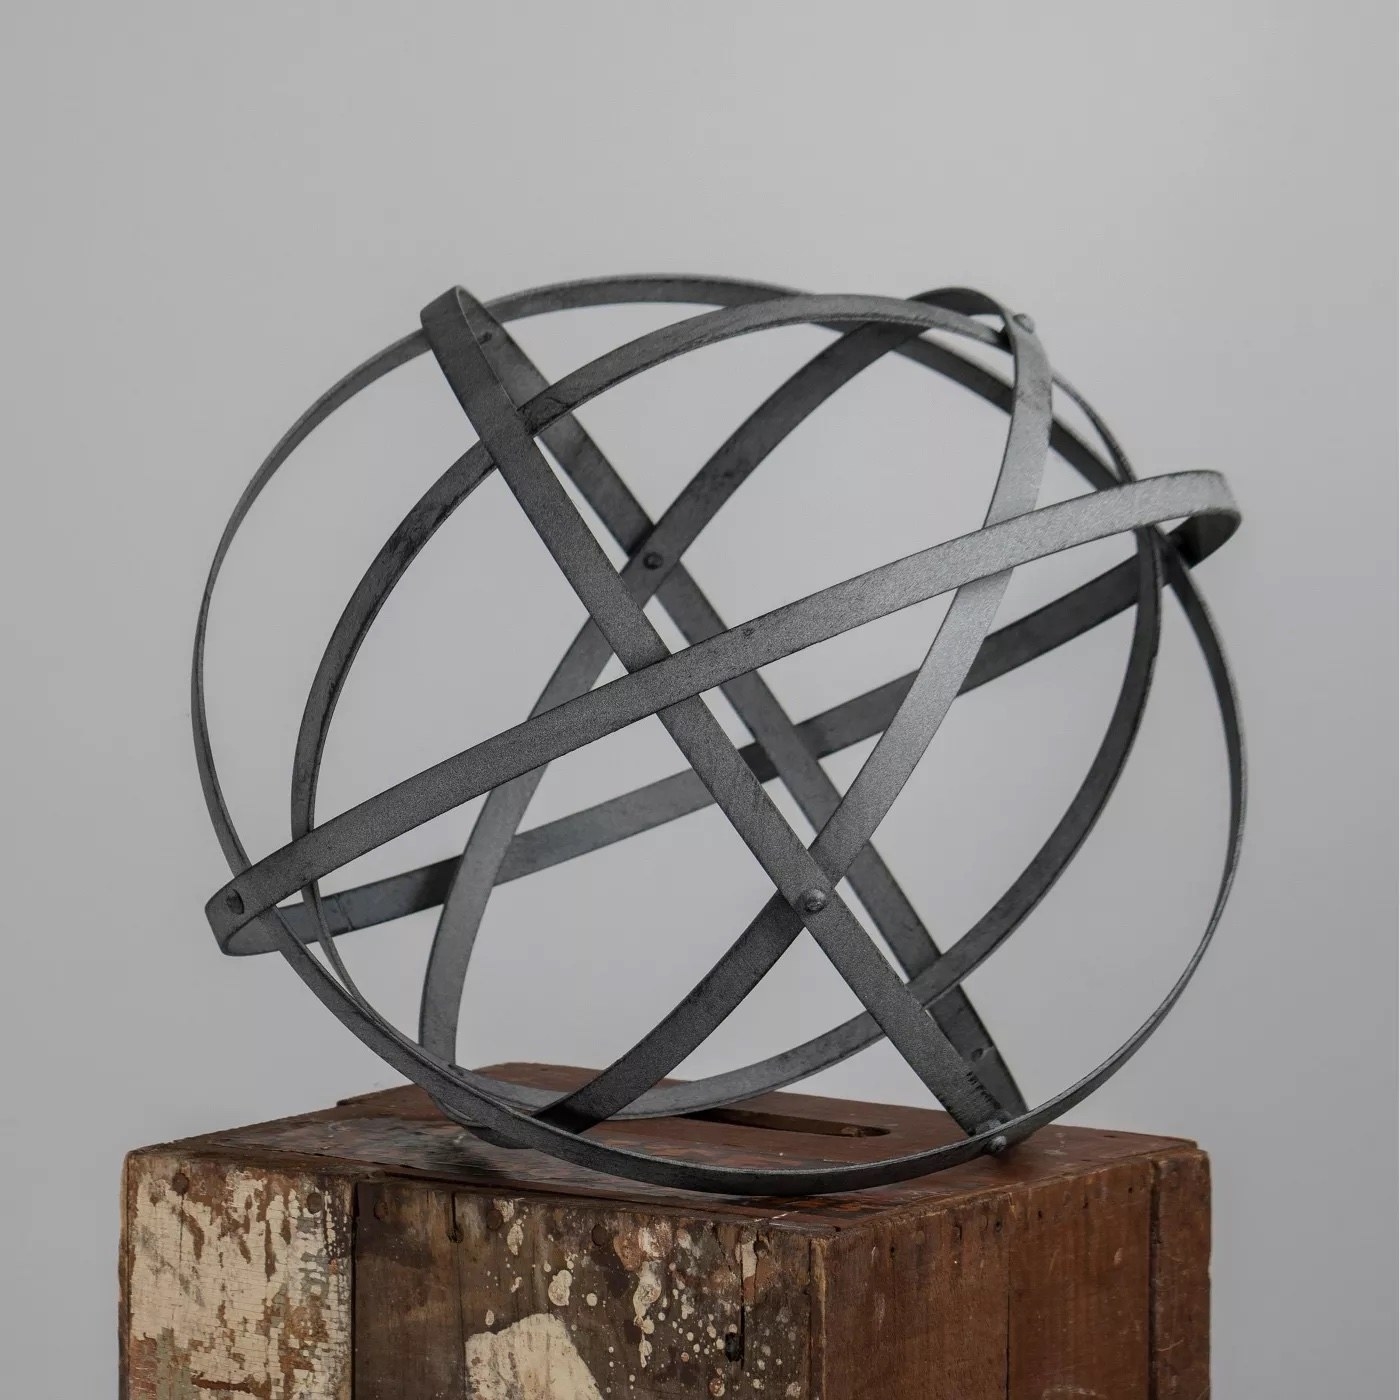 a decorative sphere sculpture